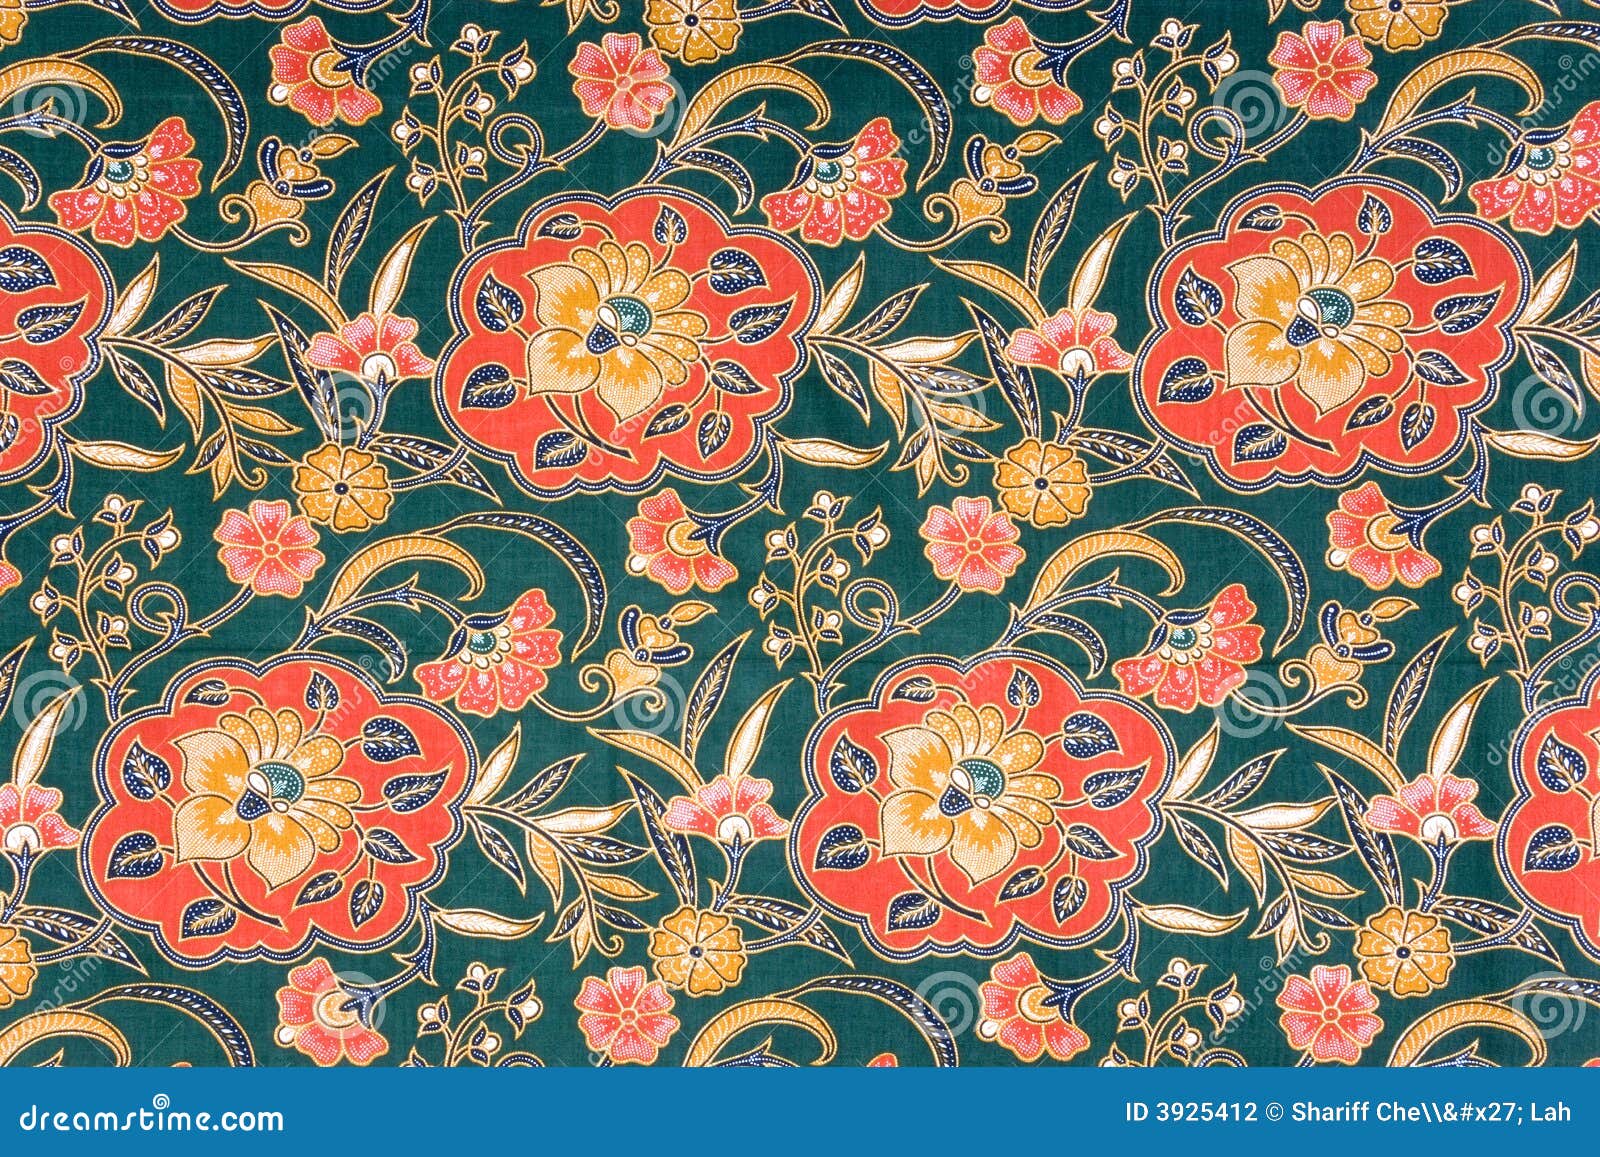 Indonesian batik sarong pattern printed onto fabric.